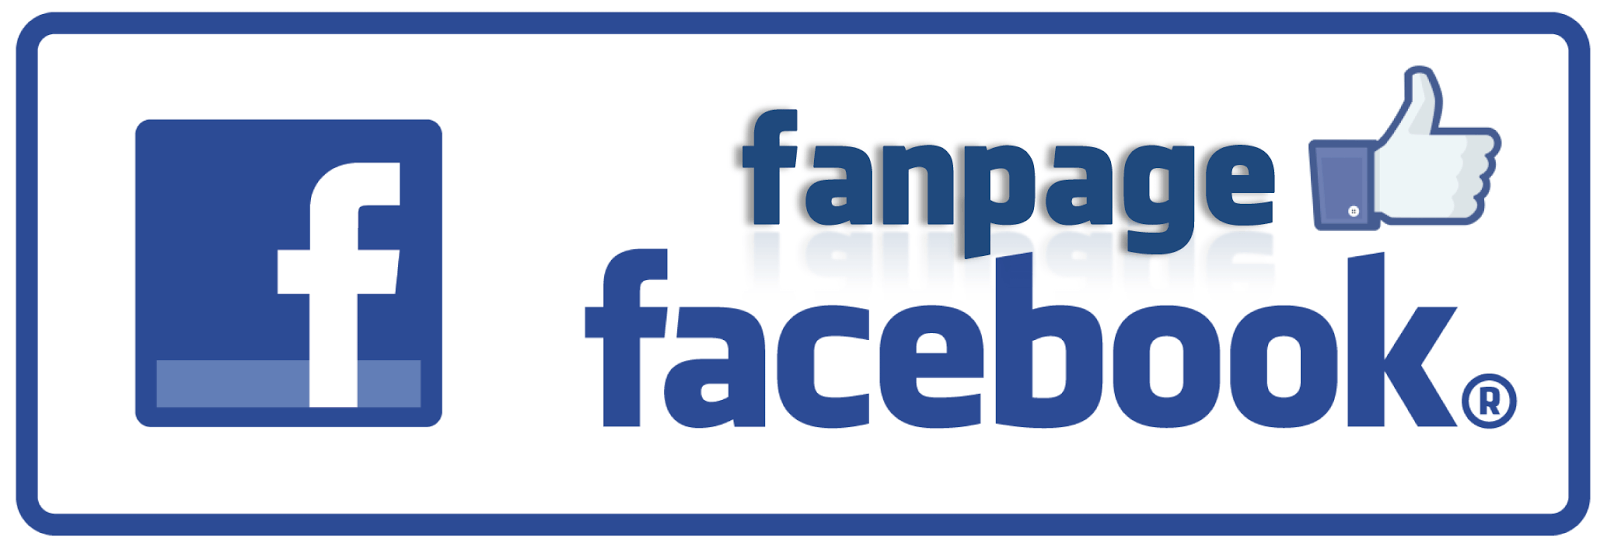 Tips-Fanpage-Facebook